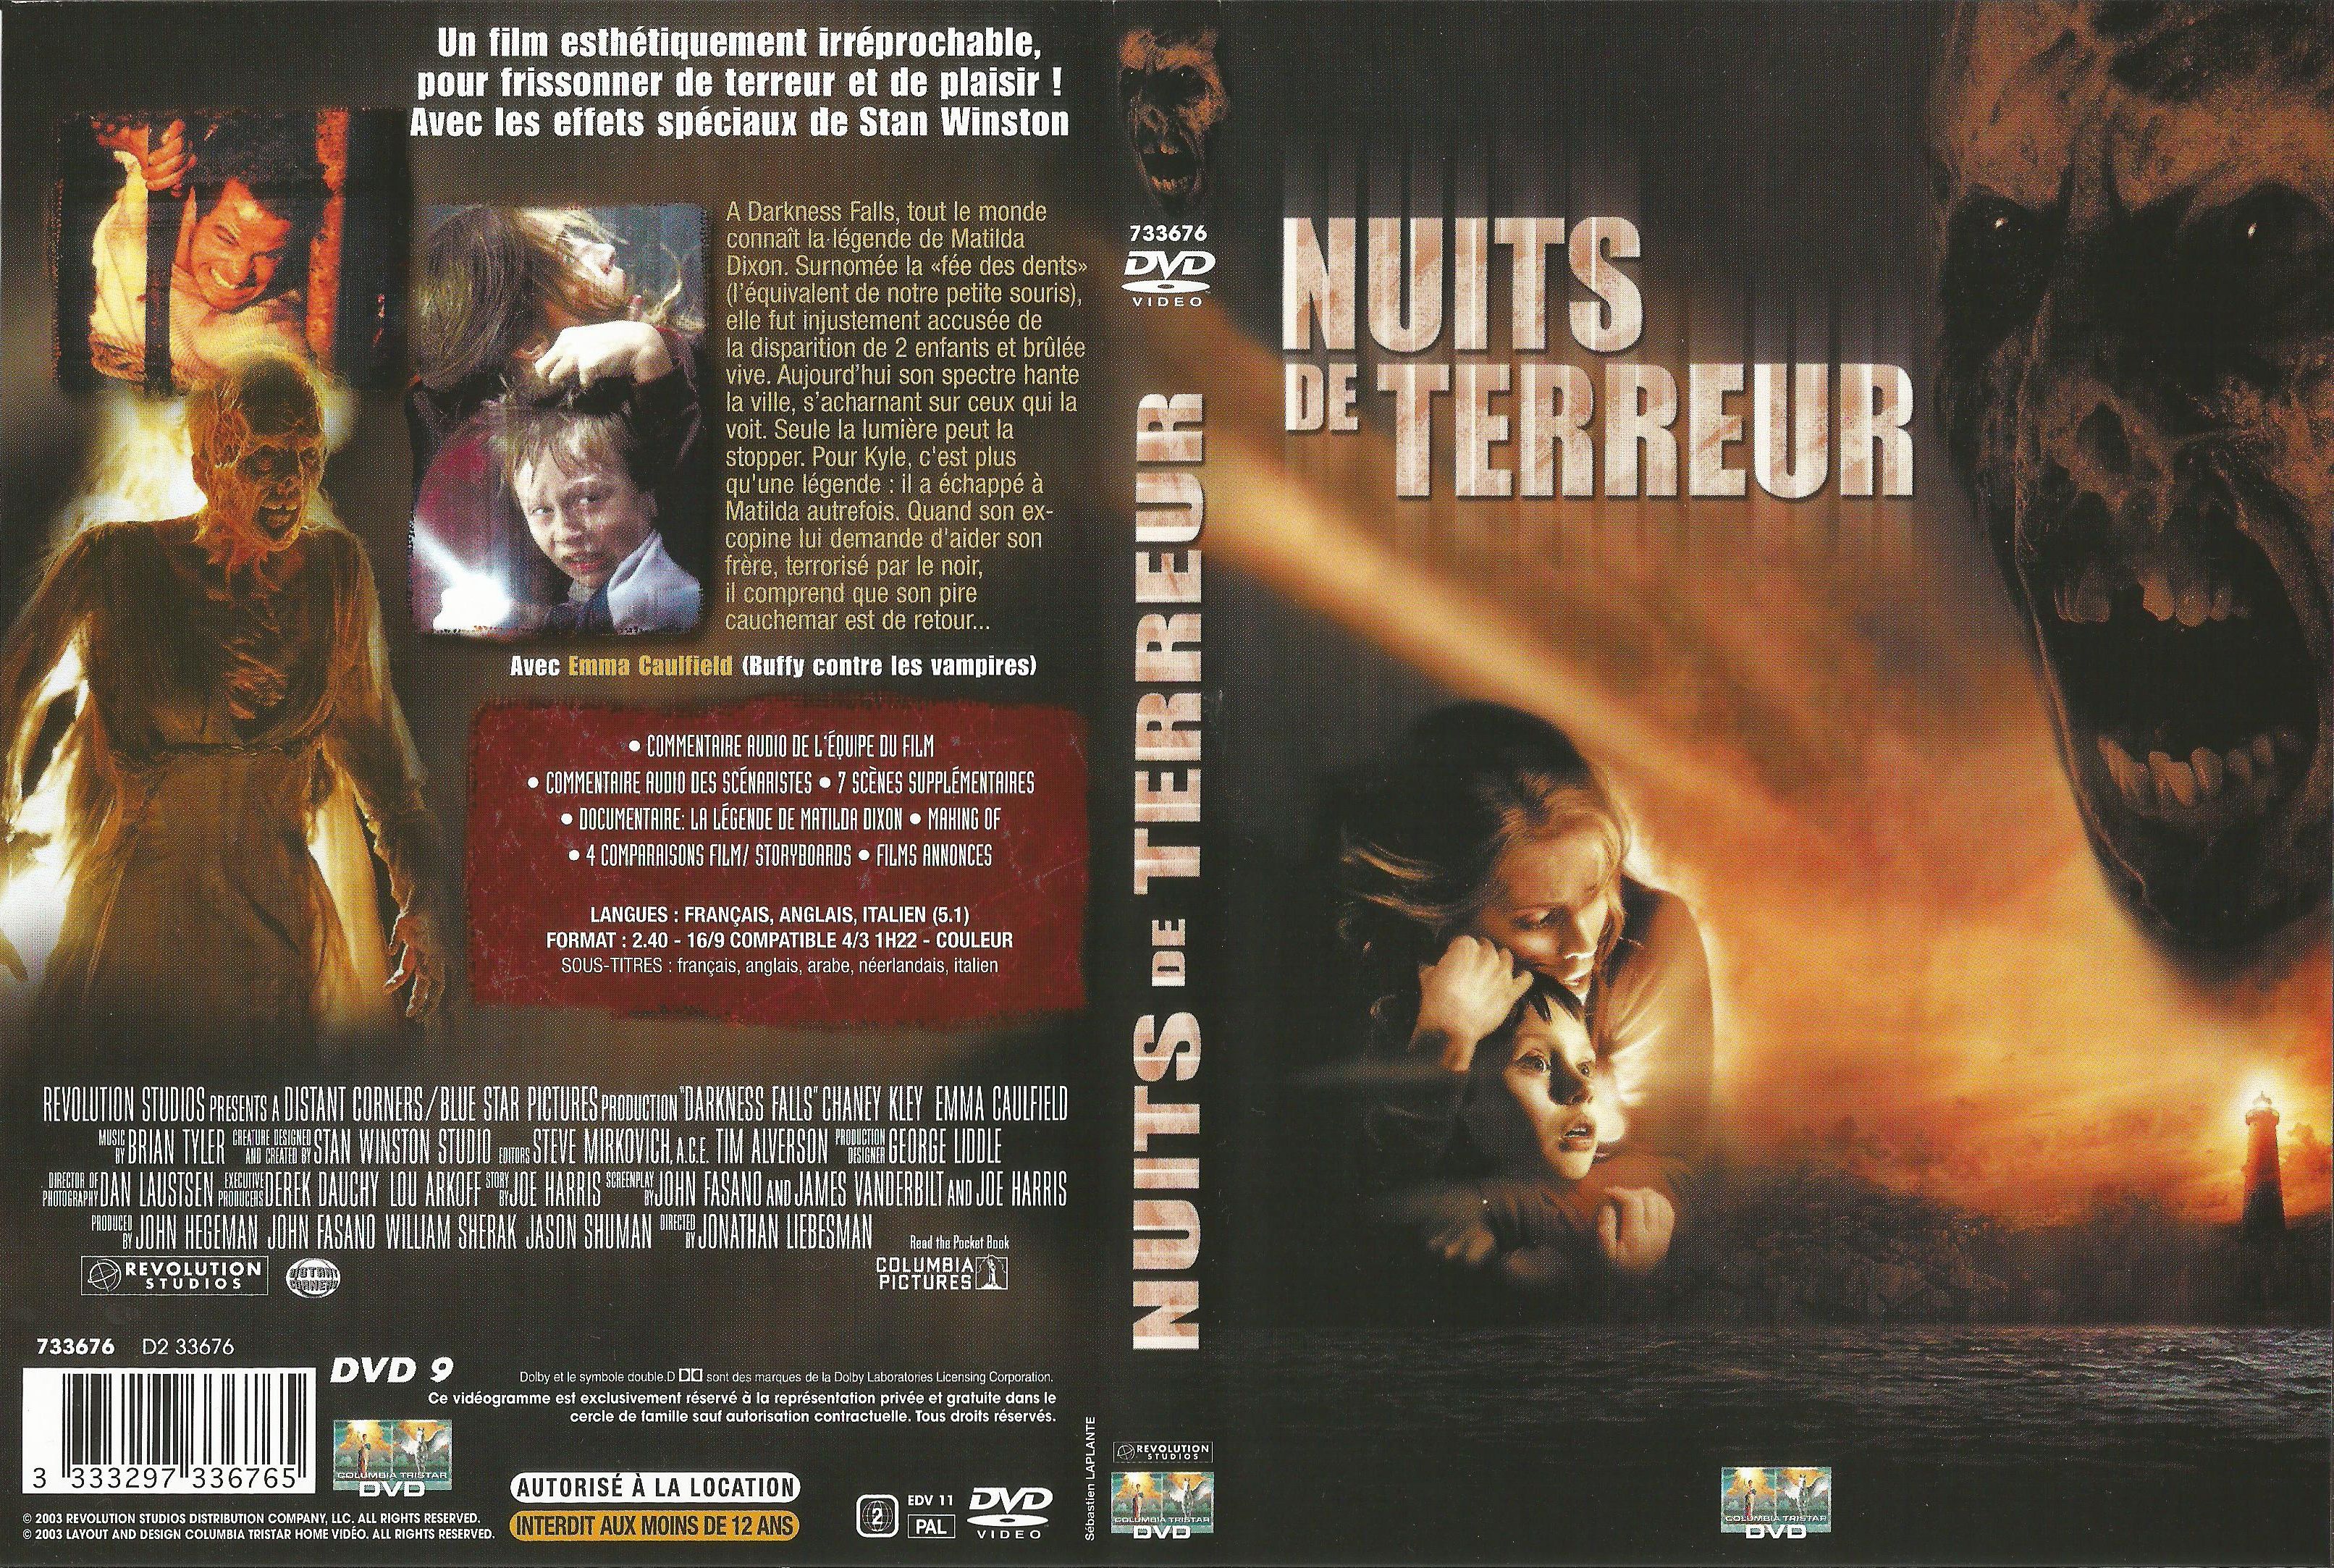 Jaquette DVD Nuits de terreur v2